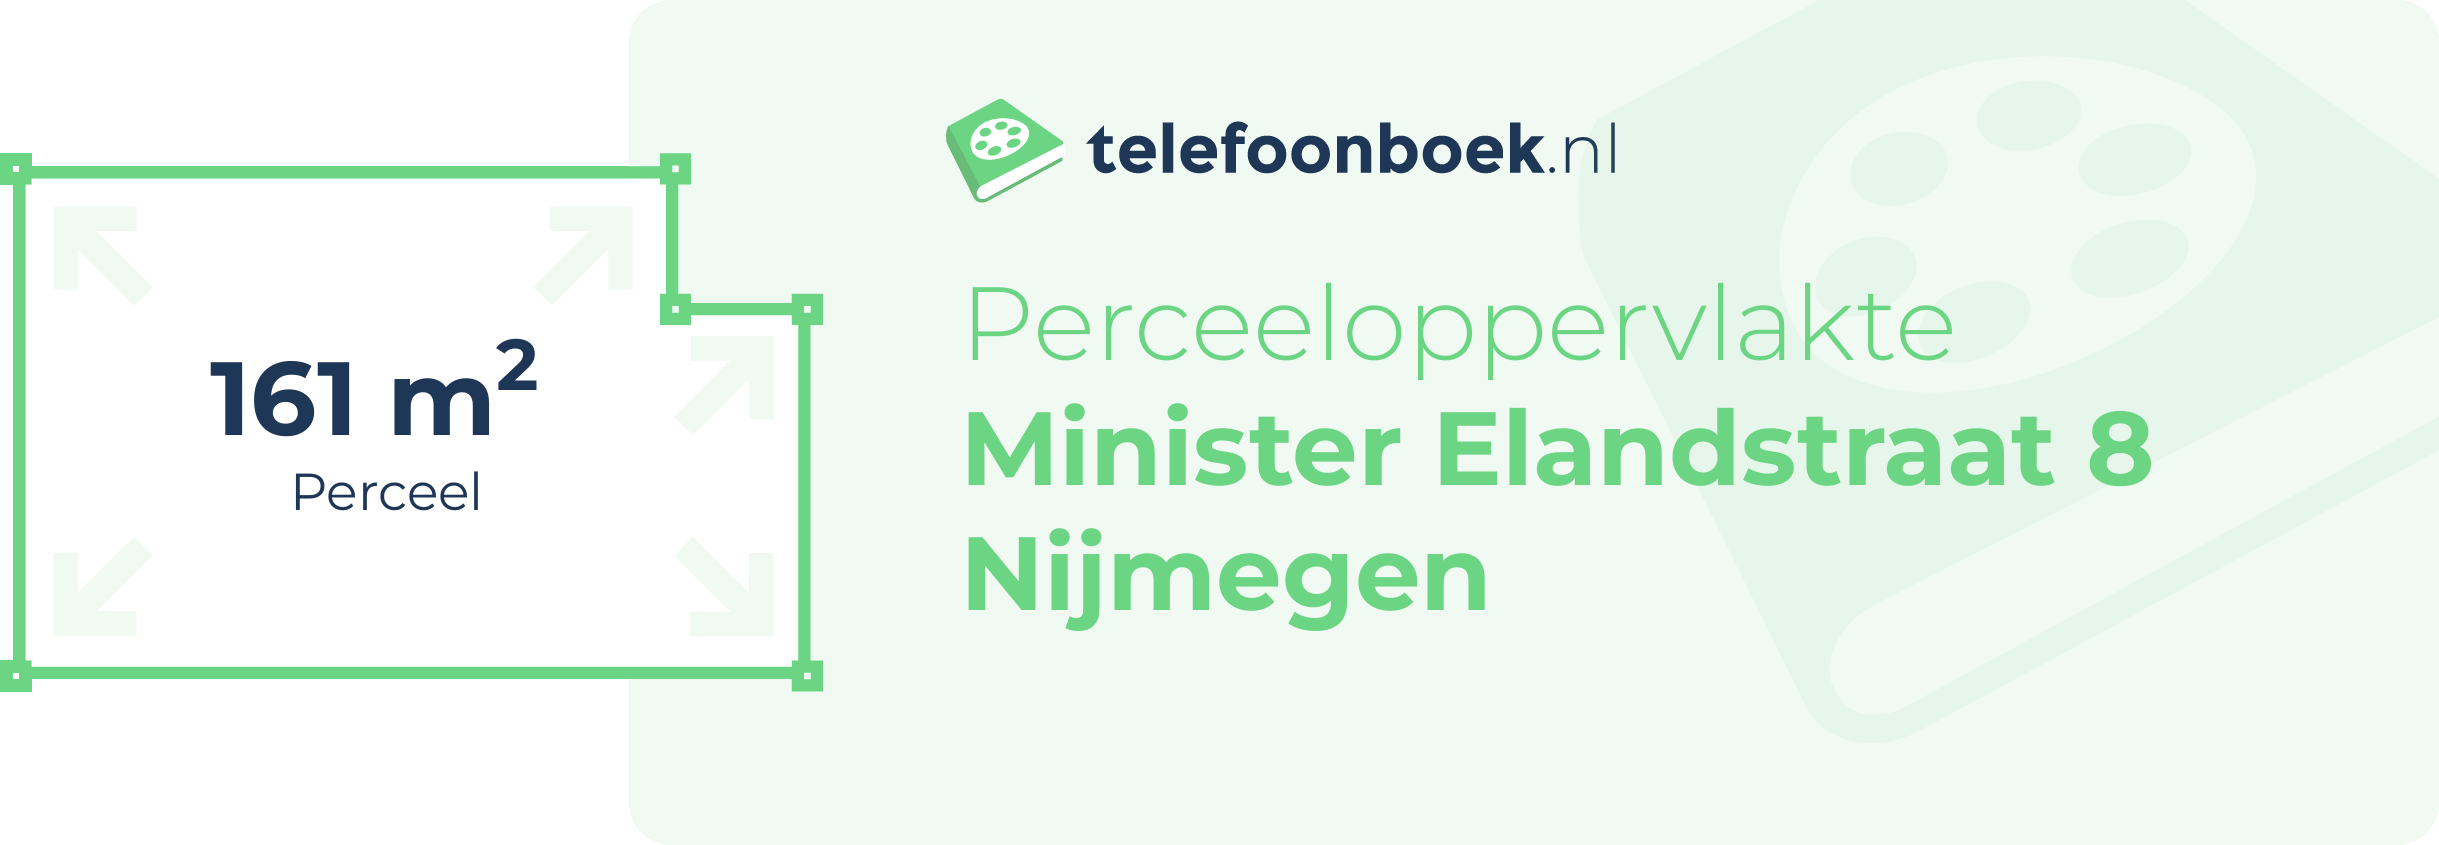 Perceeloppervlakte Minister Elandstraat 8 Nijmegen